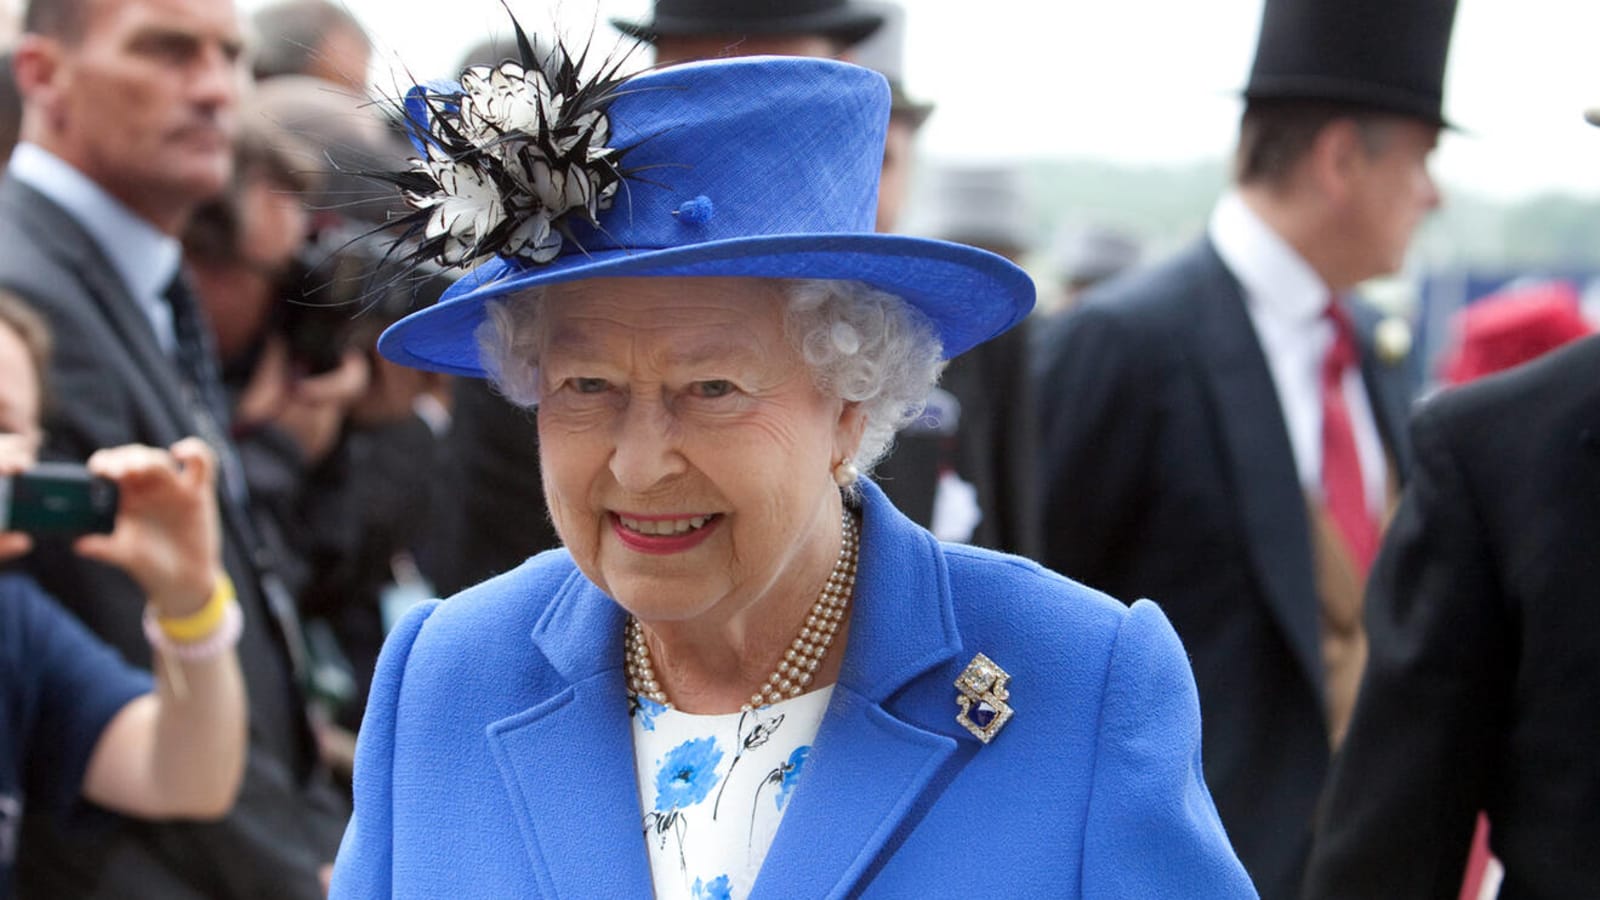 Premier League suspended after Queen Elizabeth II death